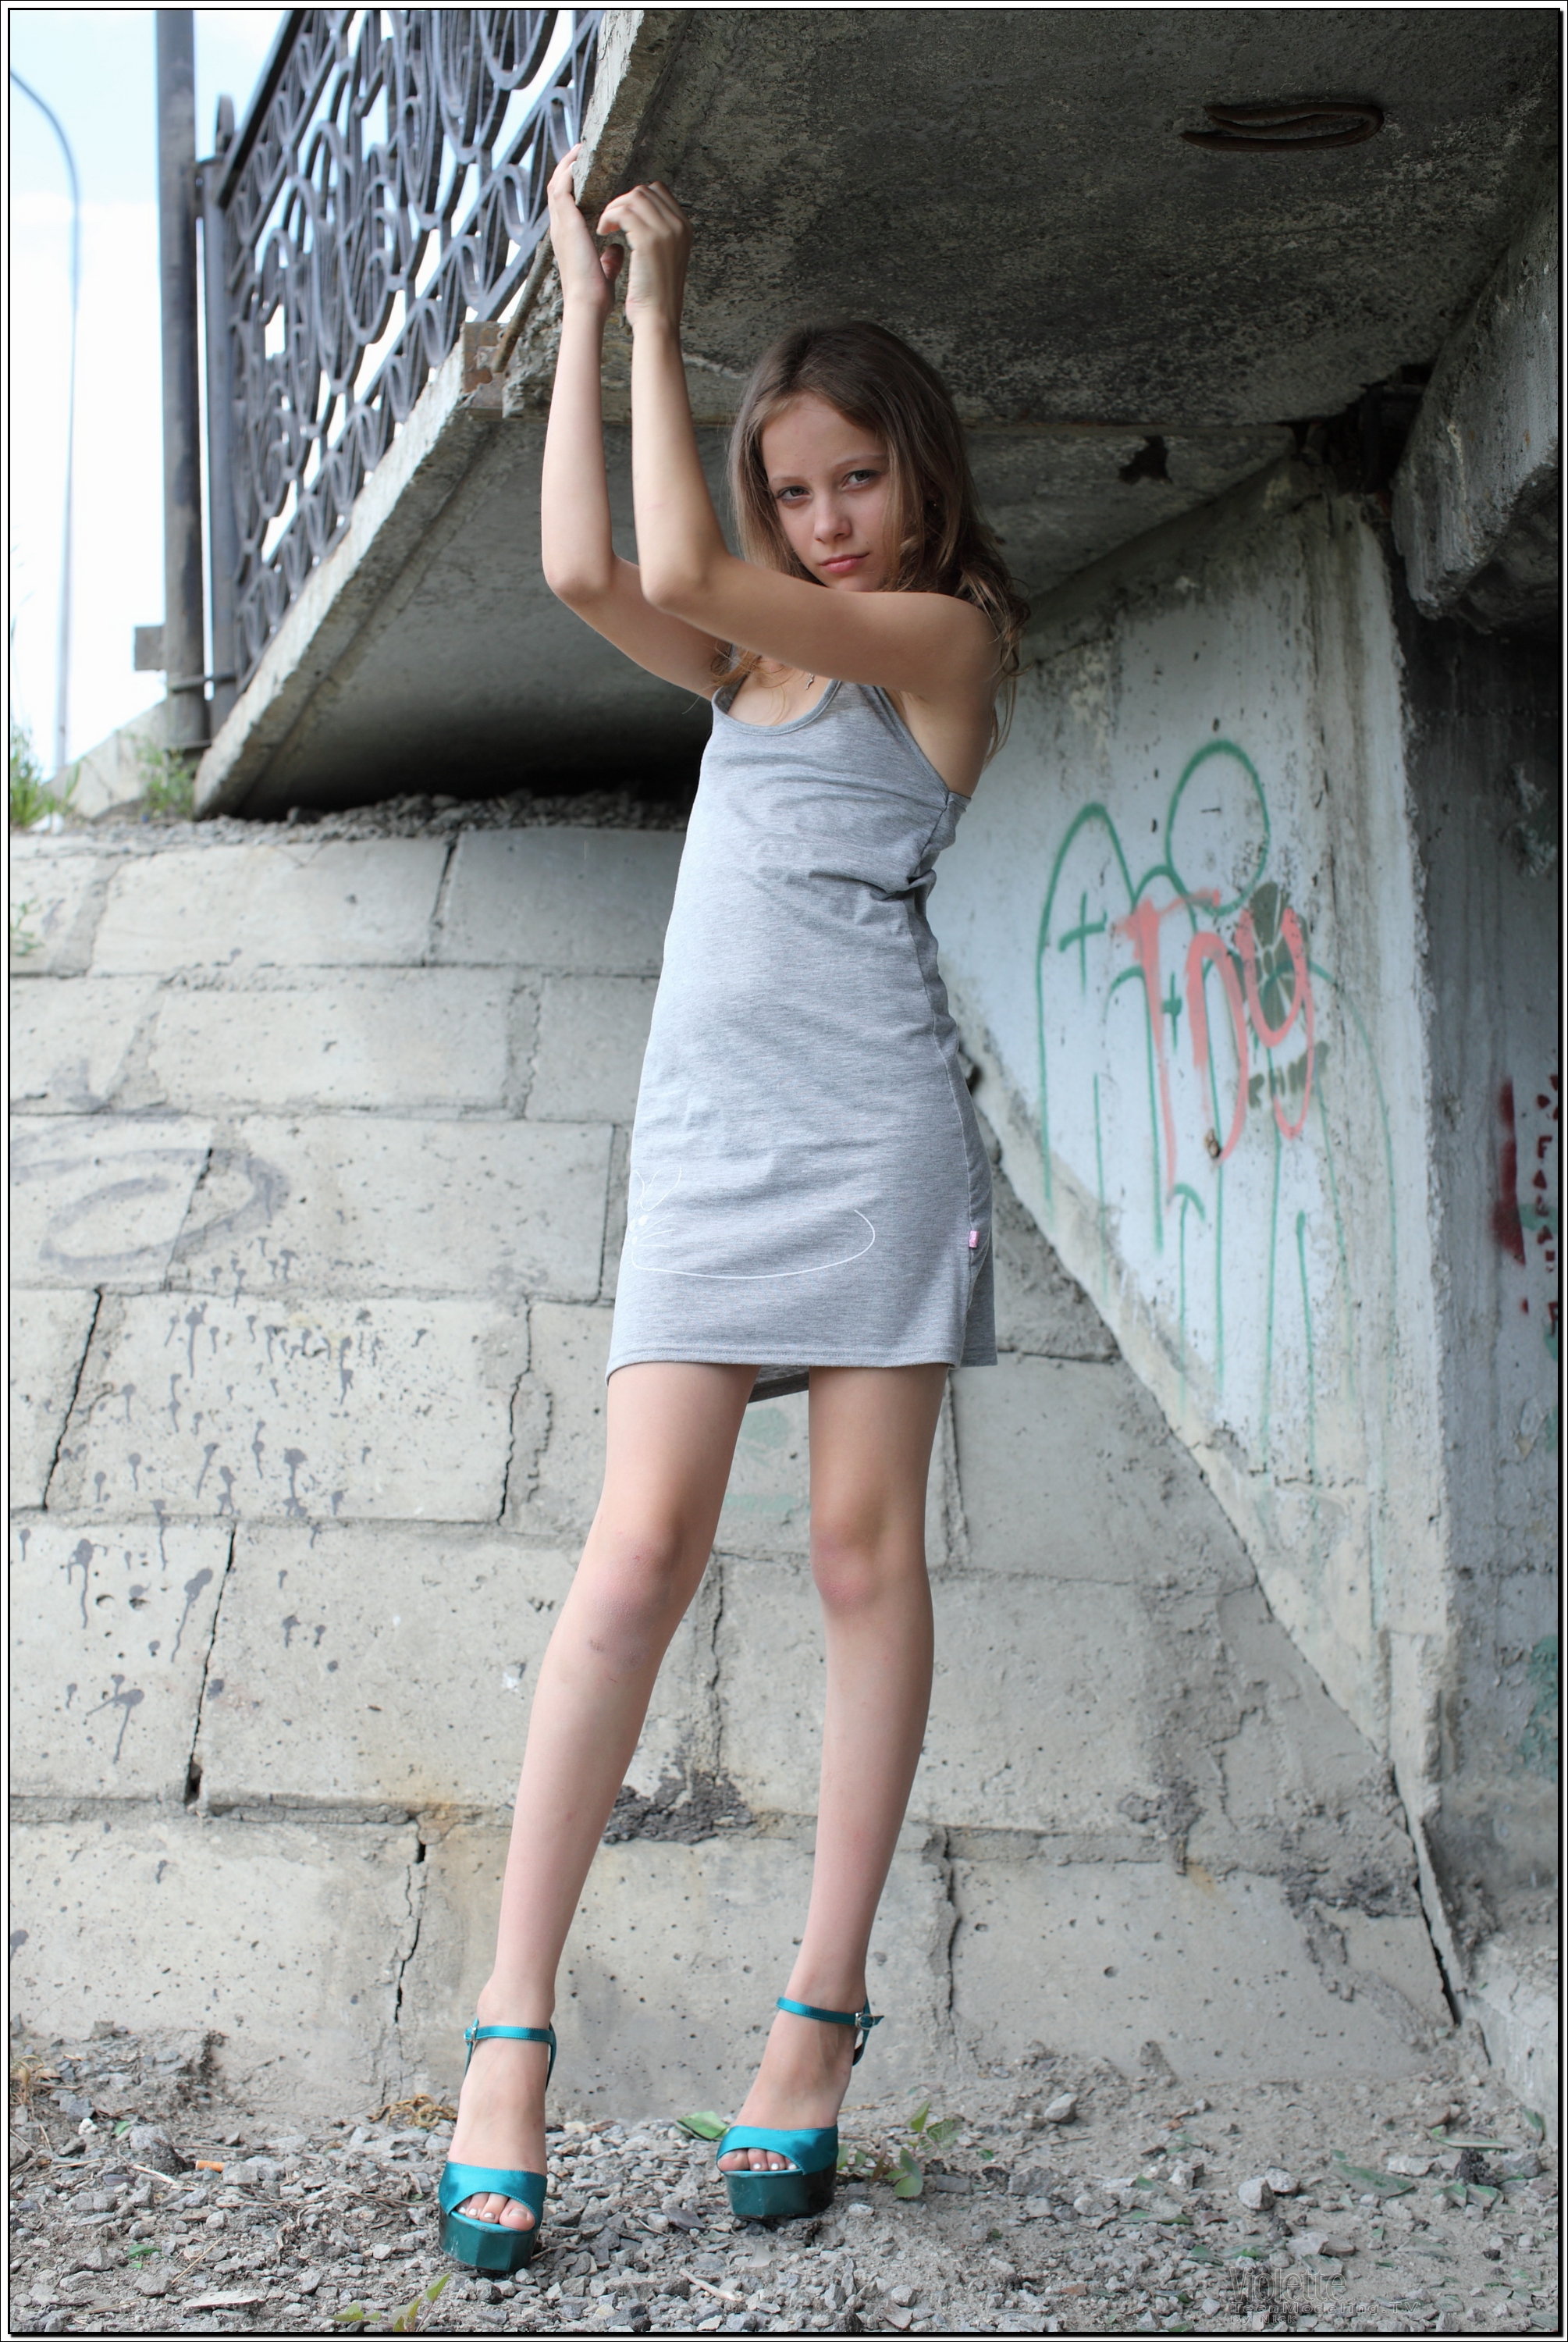 violette_model_greydress_teenmodeling_tv_042.jpg